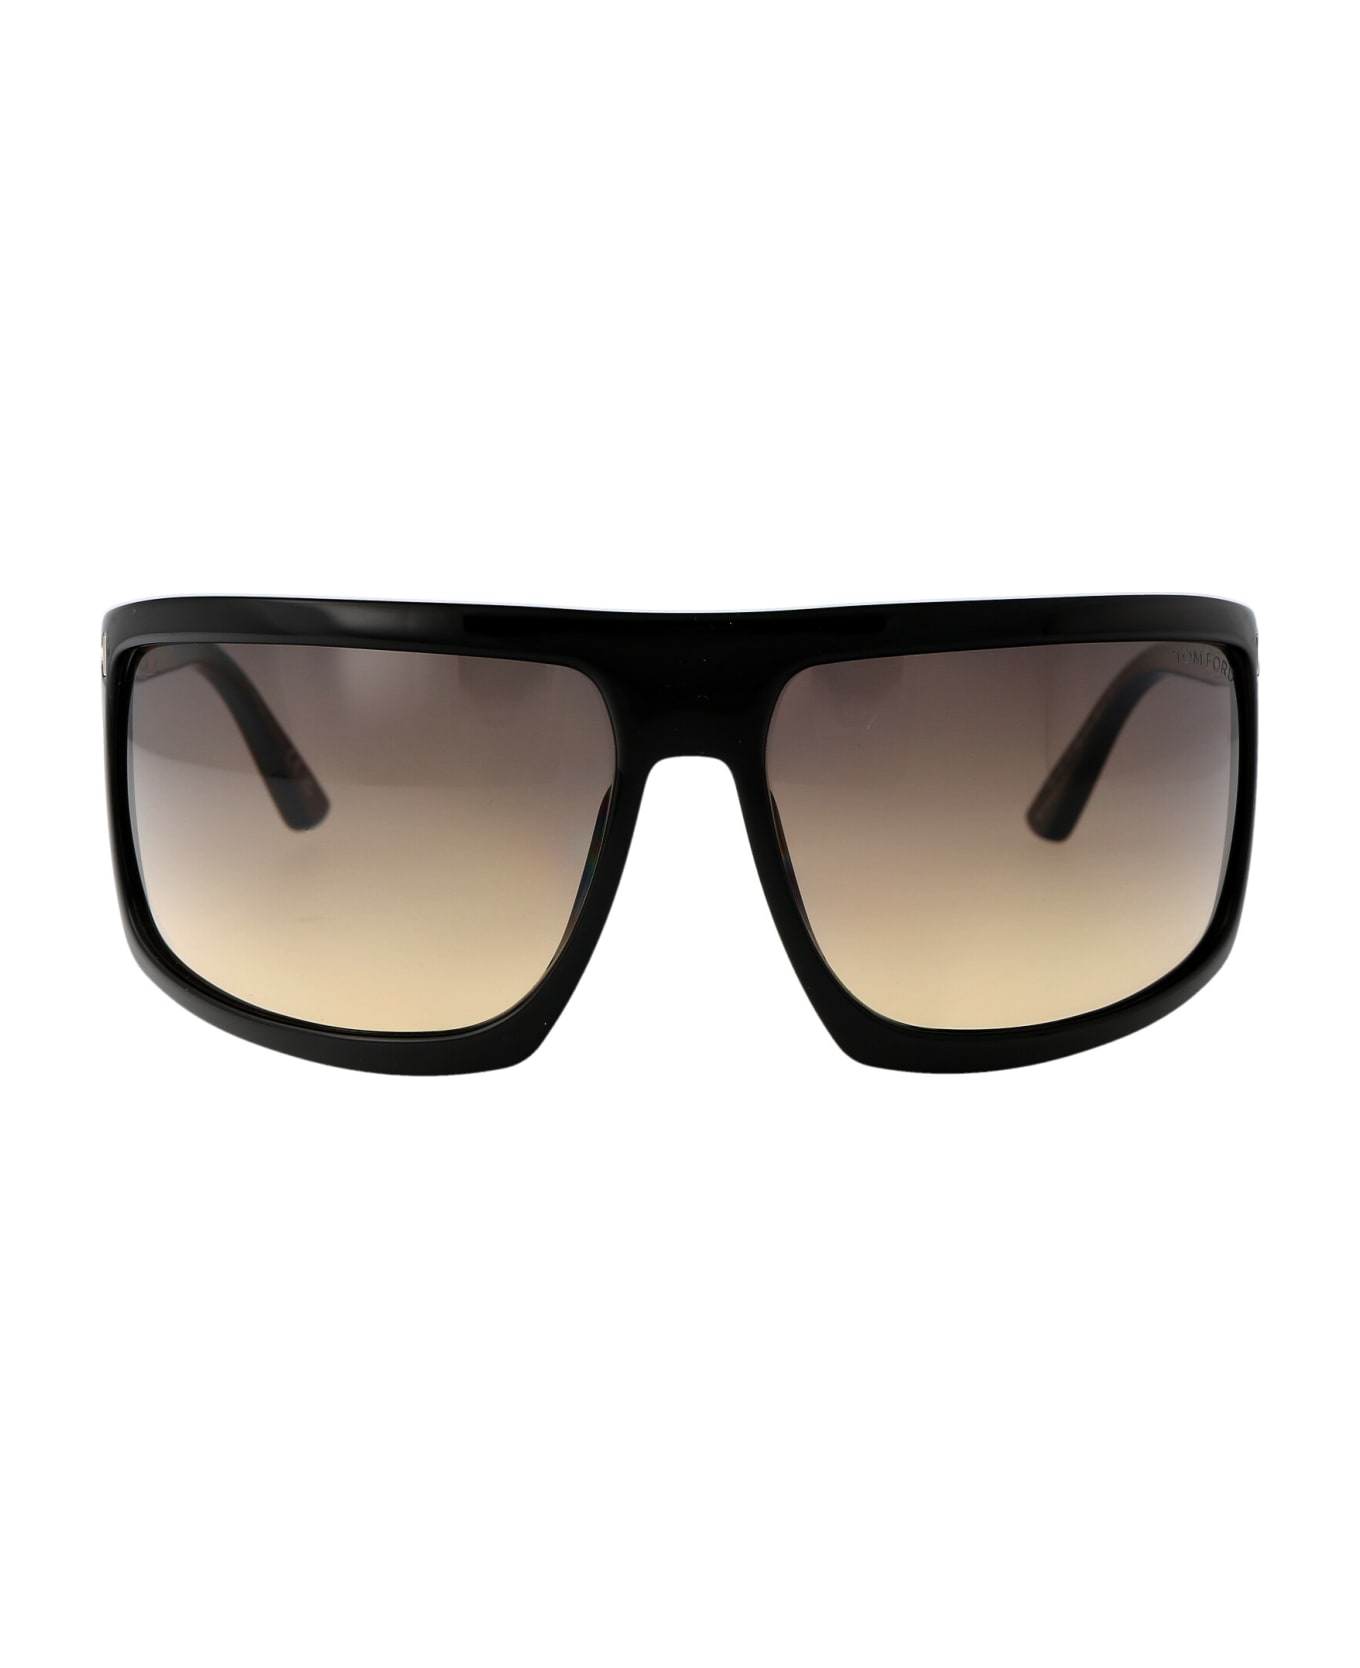 Tom Ford Eyewear Clint-02 Sunglasses - 01B Nero Lucido / Fumo Grad